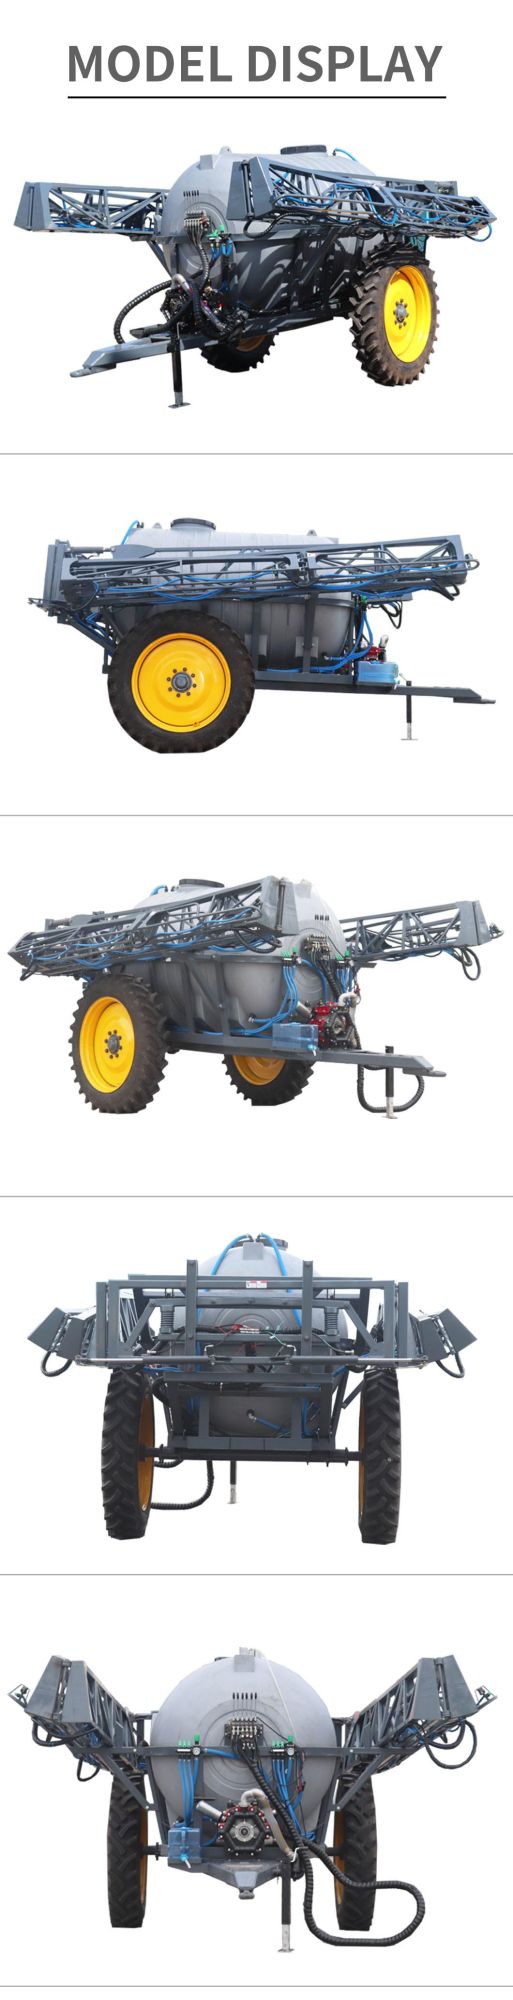 High Quality Farm Agricultural Machine Garden Tractor Crop Machinery Pesticide Boom Sprayer